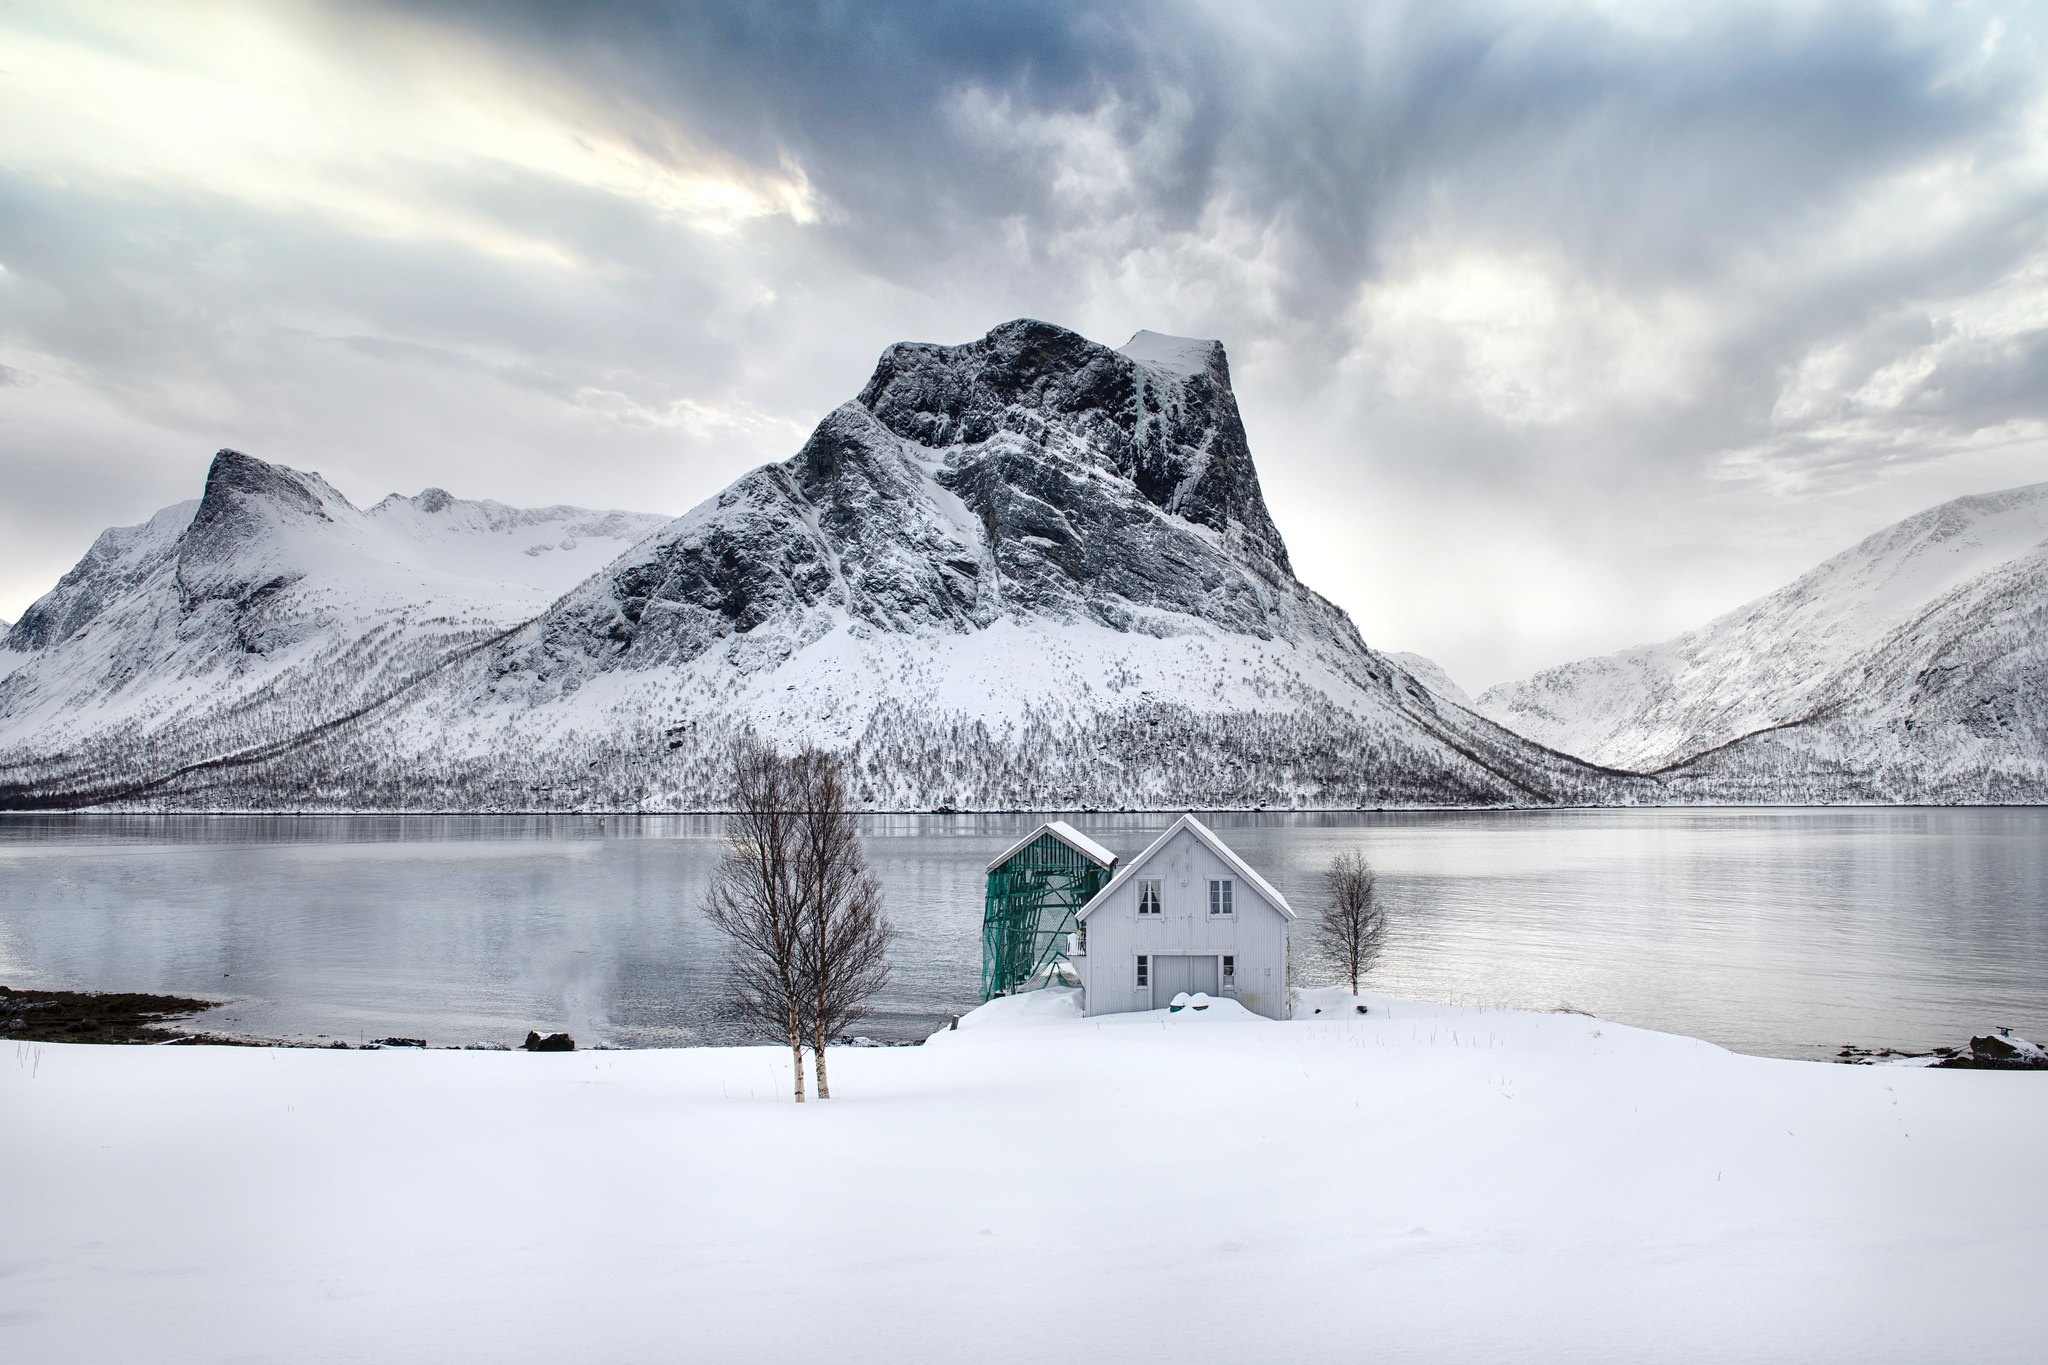 man made, boathouse, mountain, norway, winter